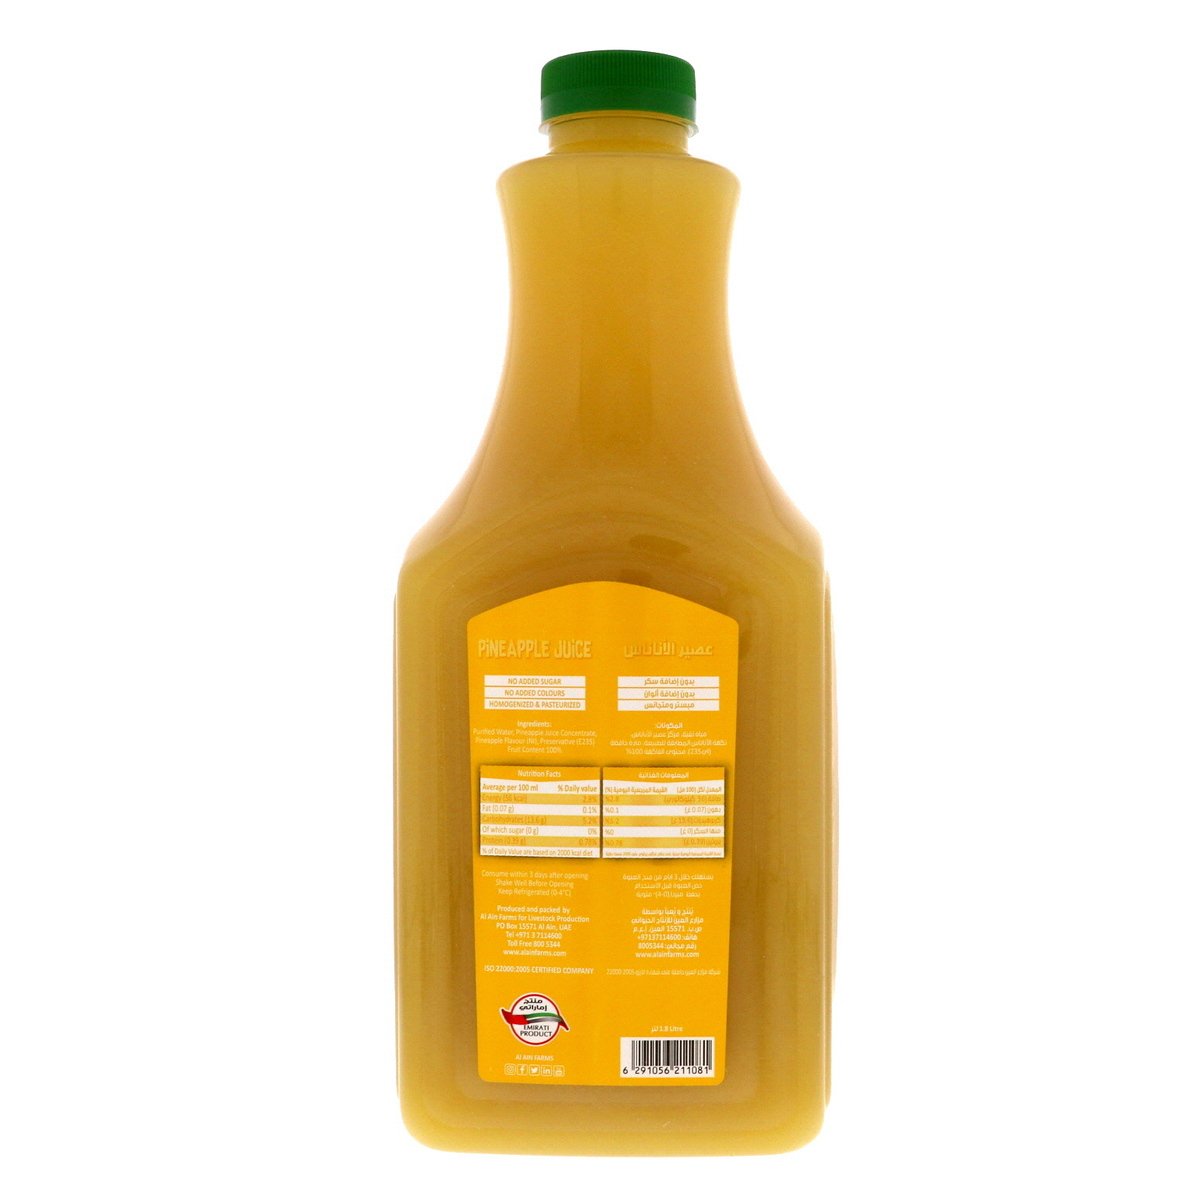 Al Ain Pineapple Juice 1.8 Litres